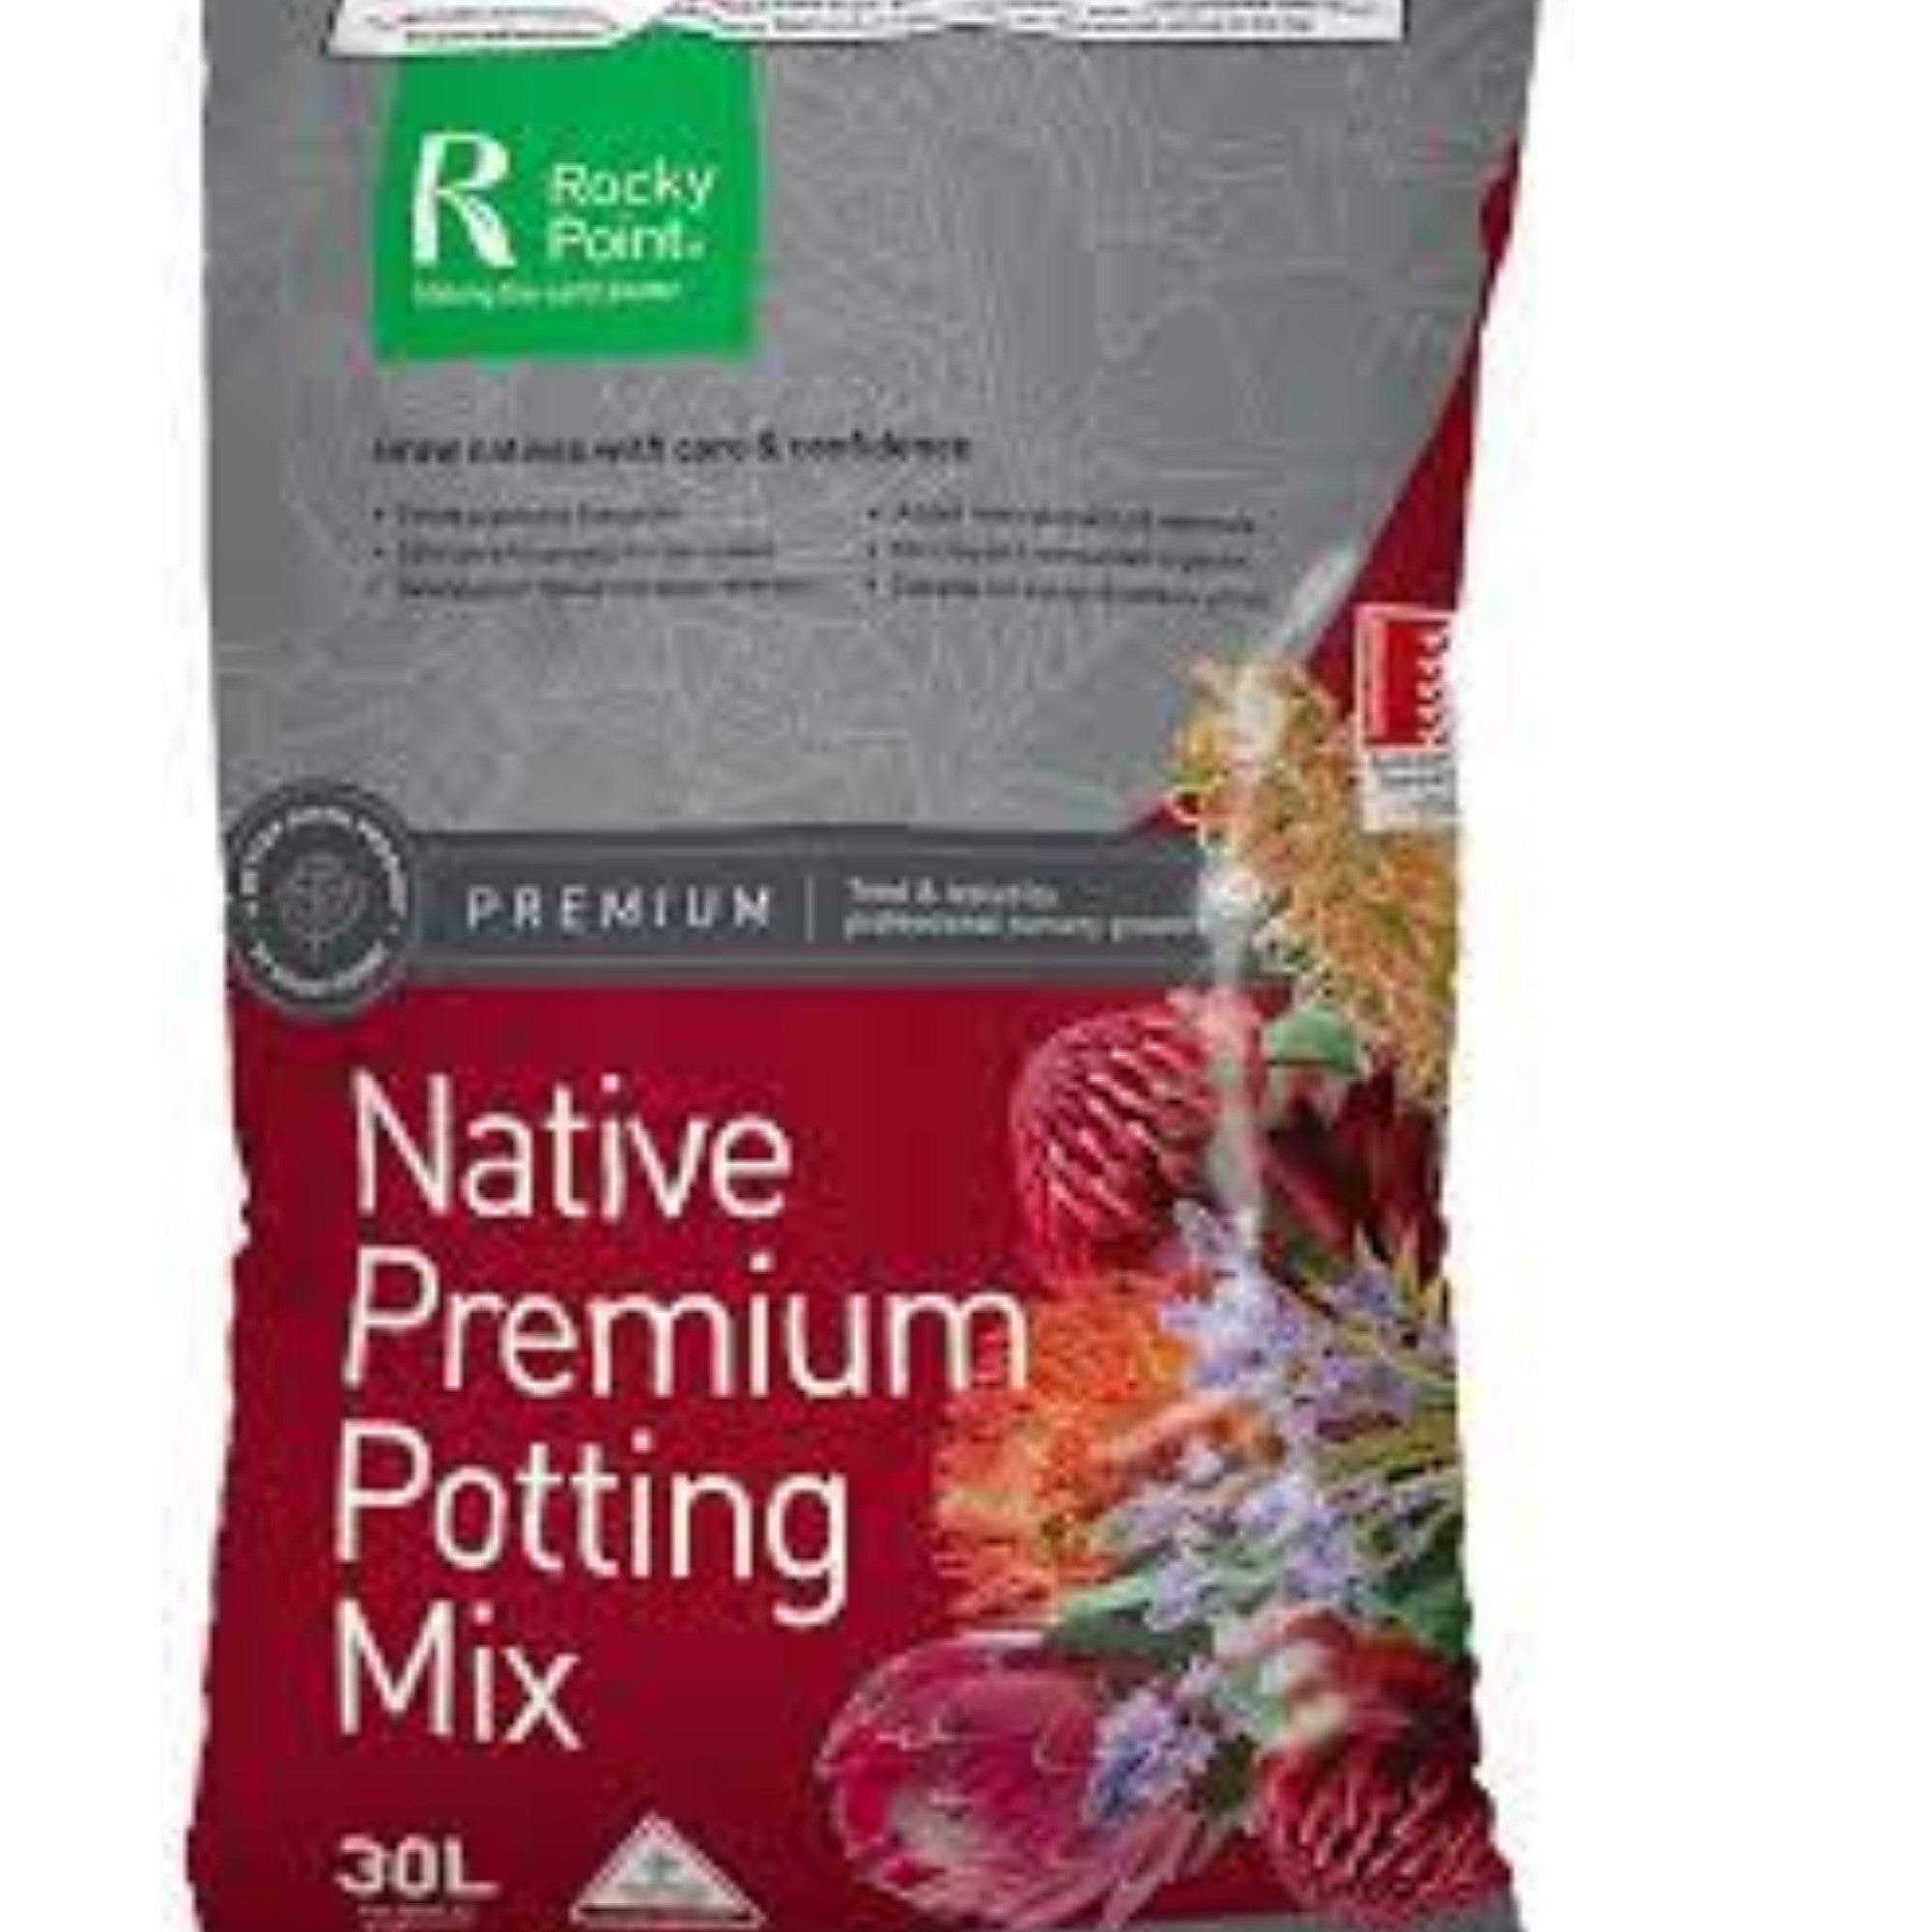 Native Premium Potting Mix 30l